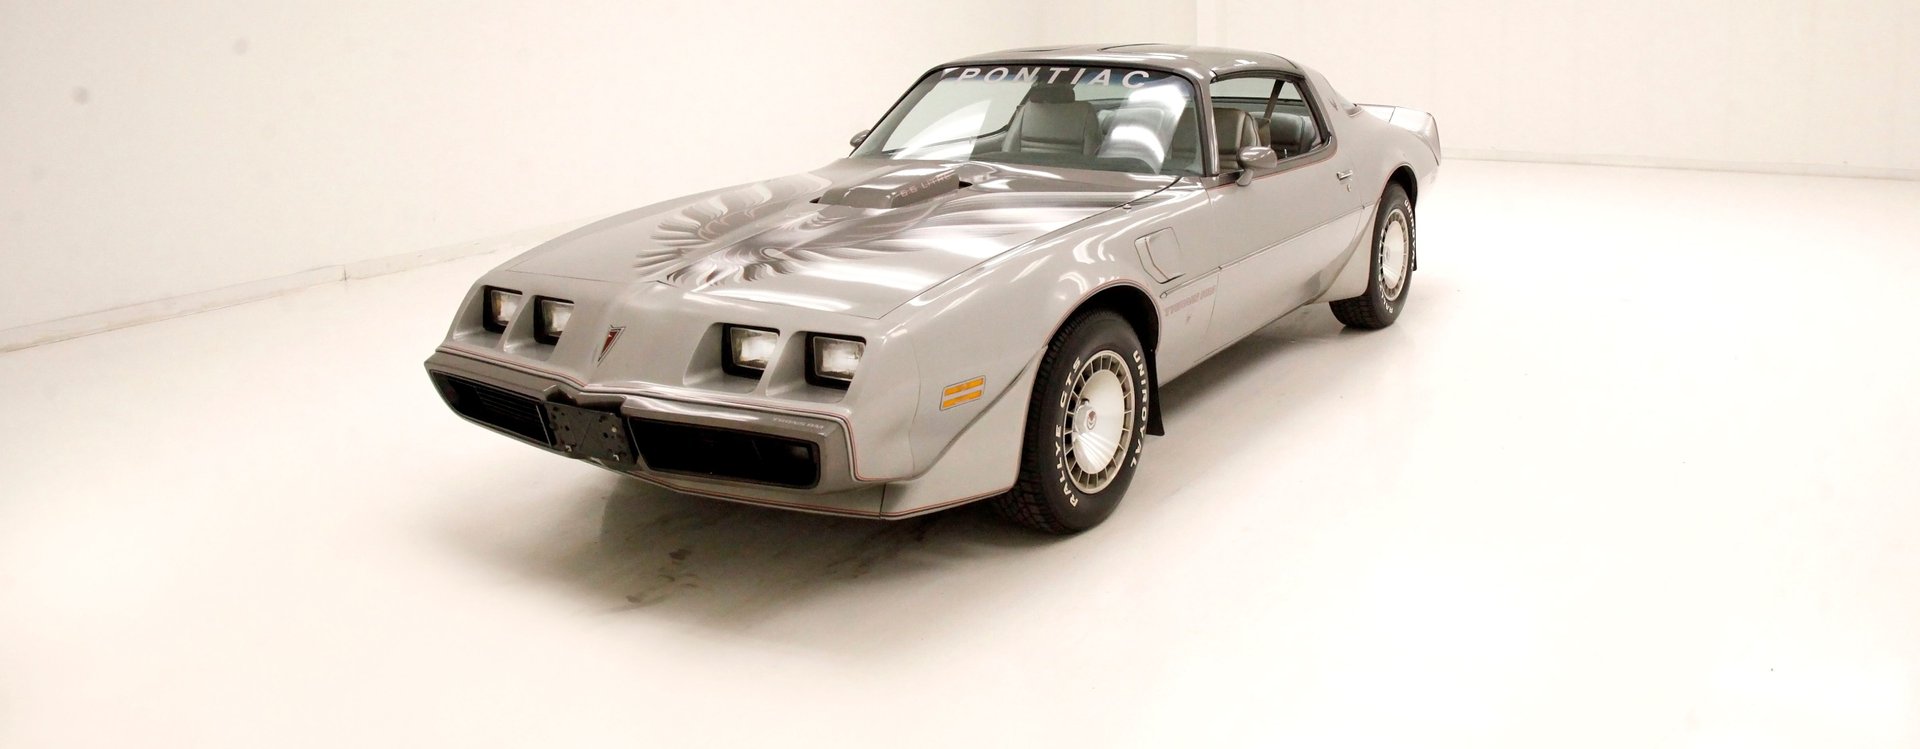 1979 Pontiac Firebird | Classic Auto Mall